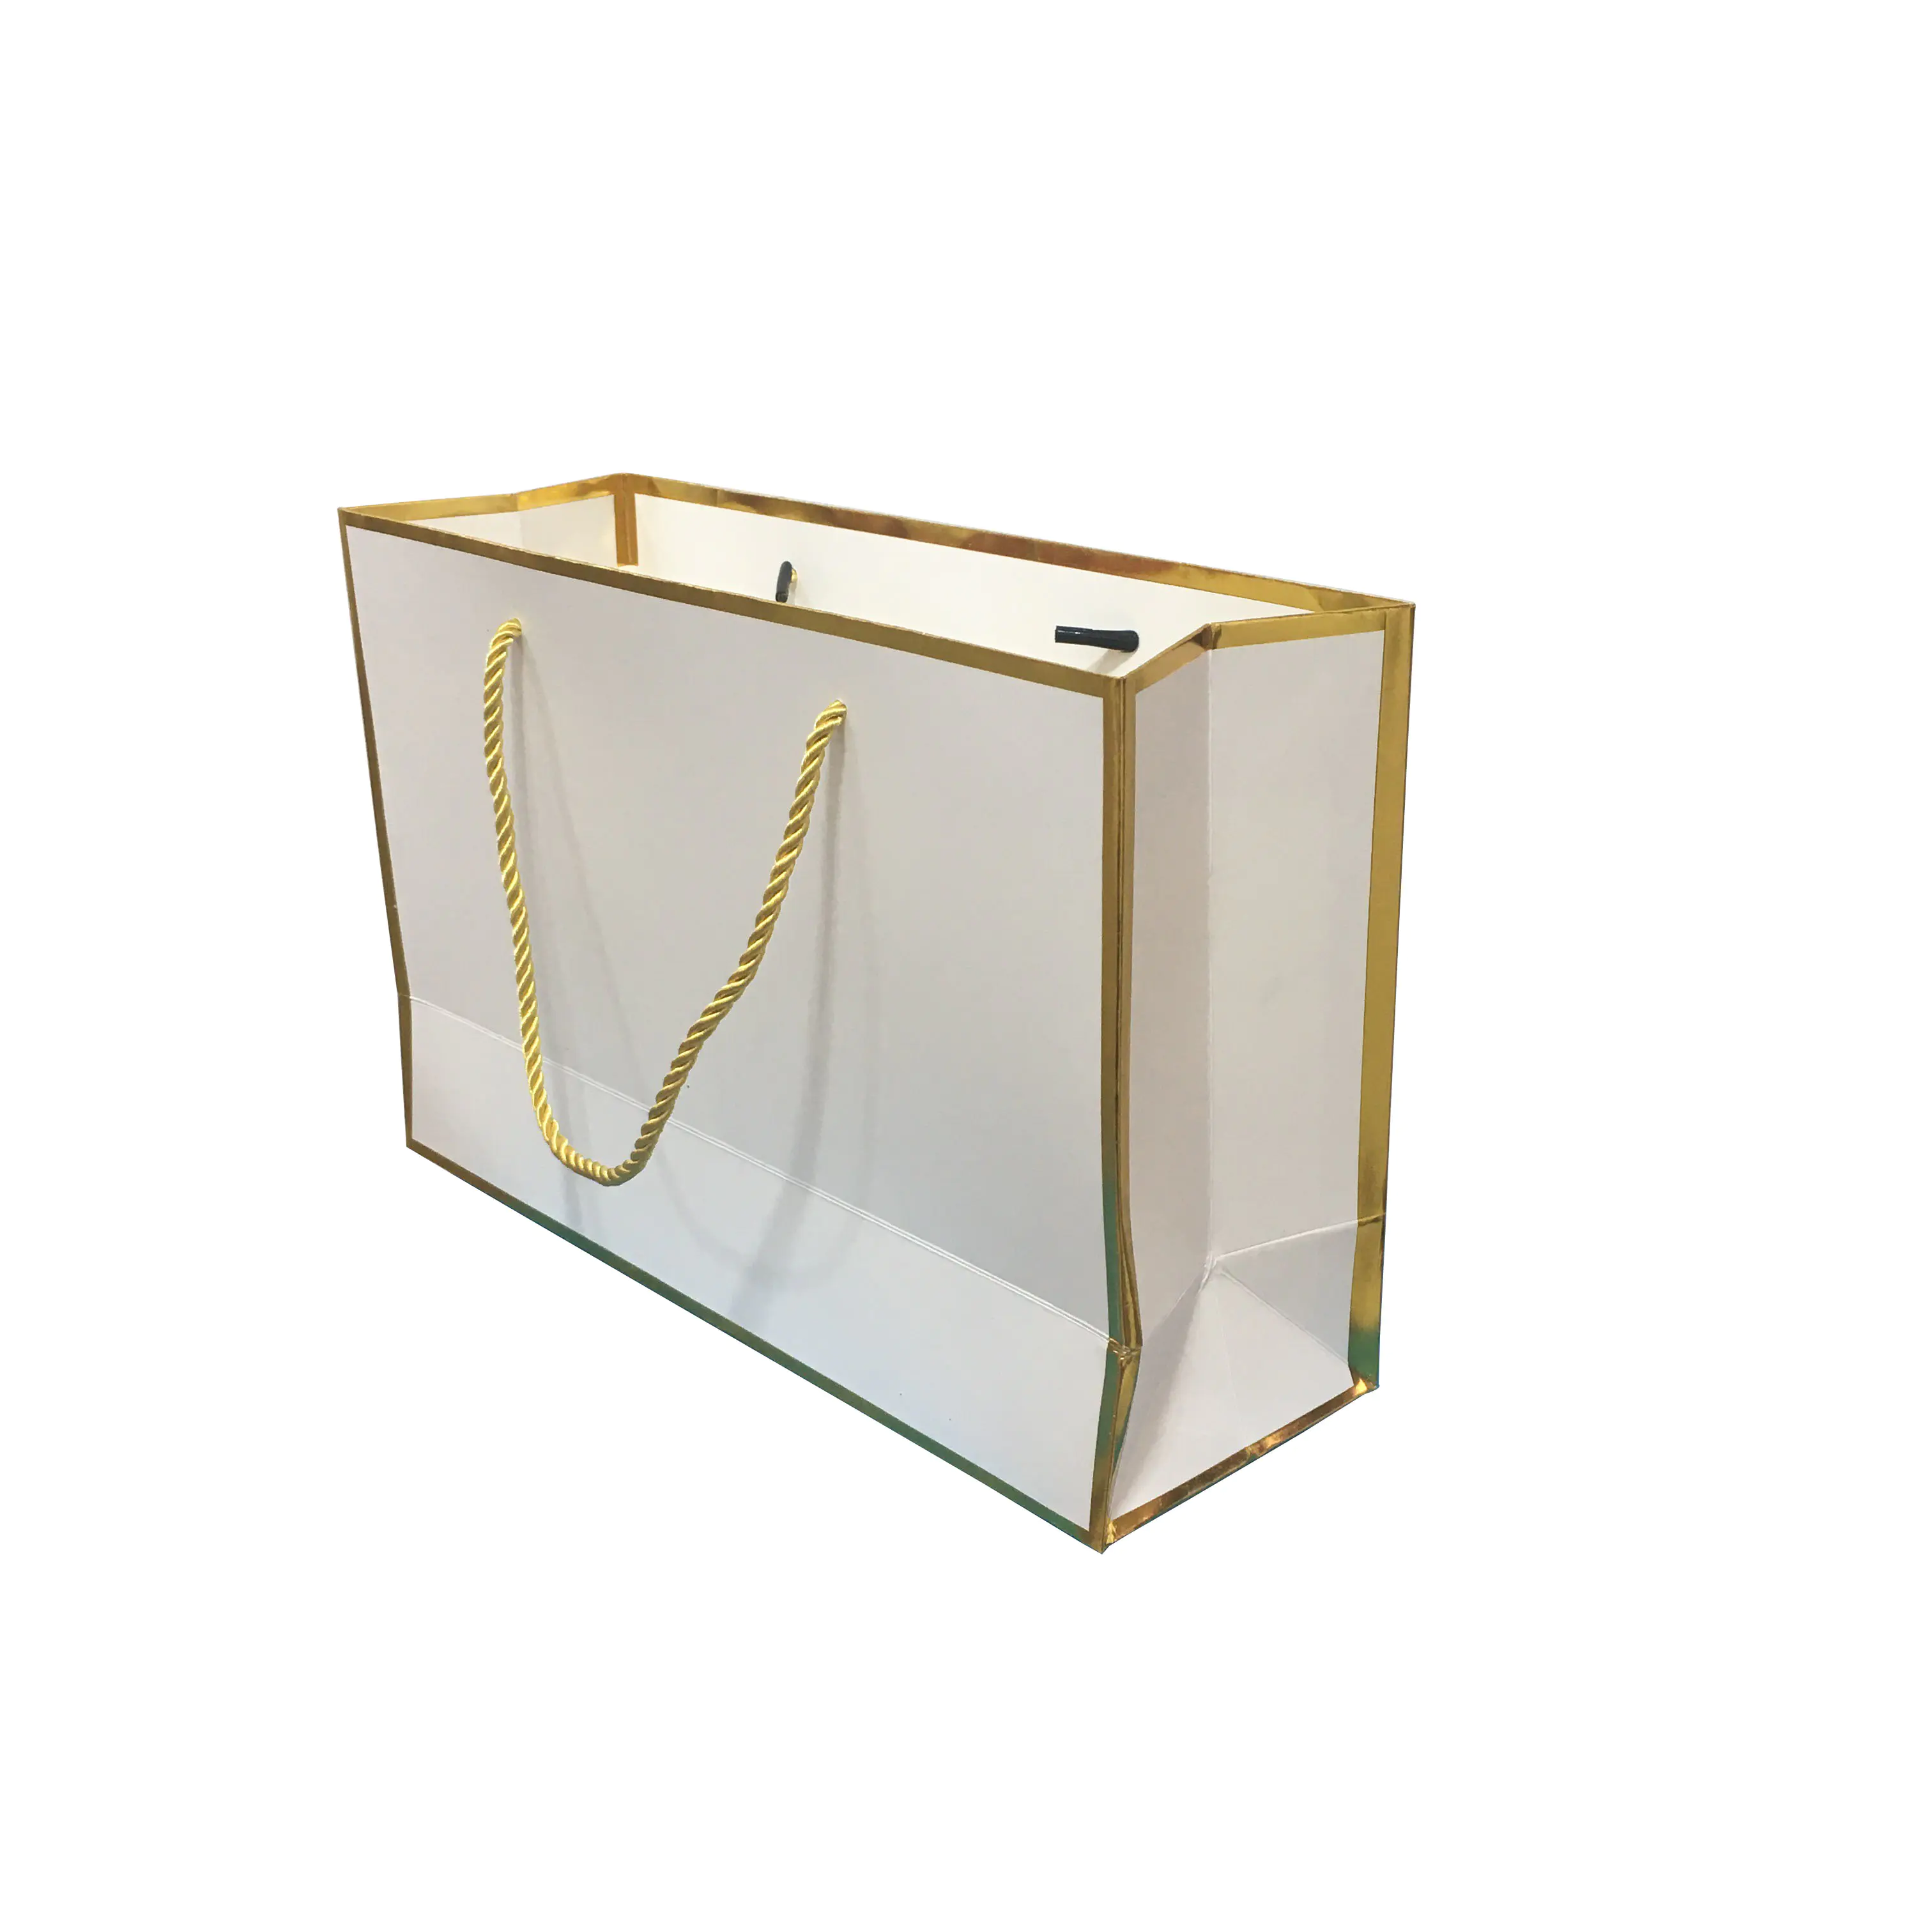 30*20*10cm size gold paper bag gold frame paper bag gold border paper bag with gold foil stamped in frame with gold pp rope handle